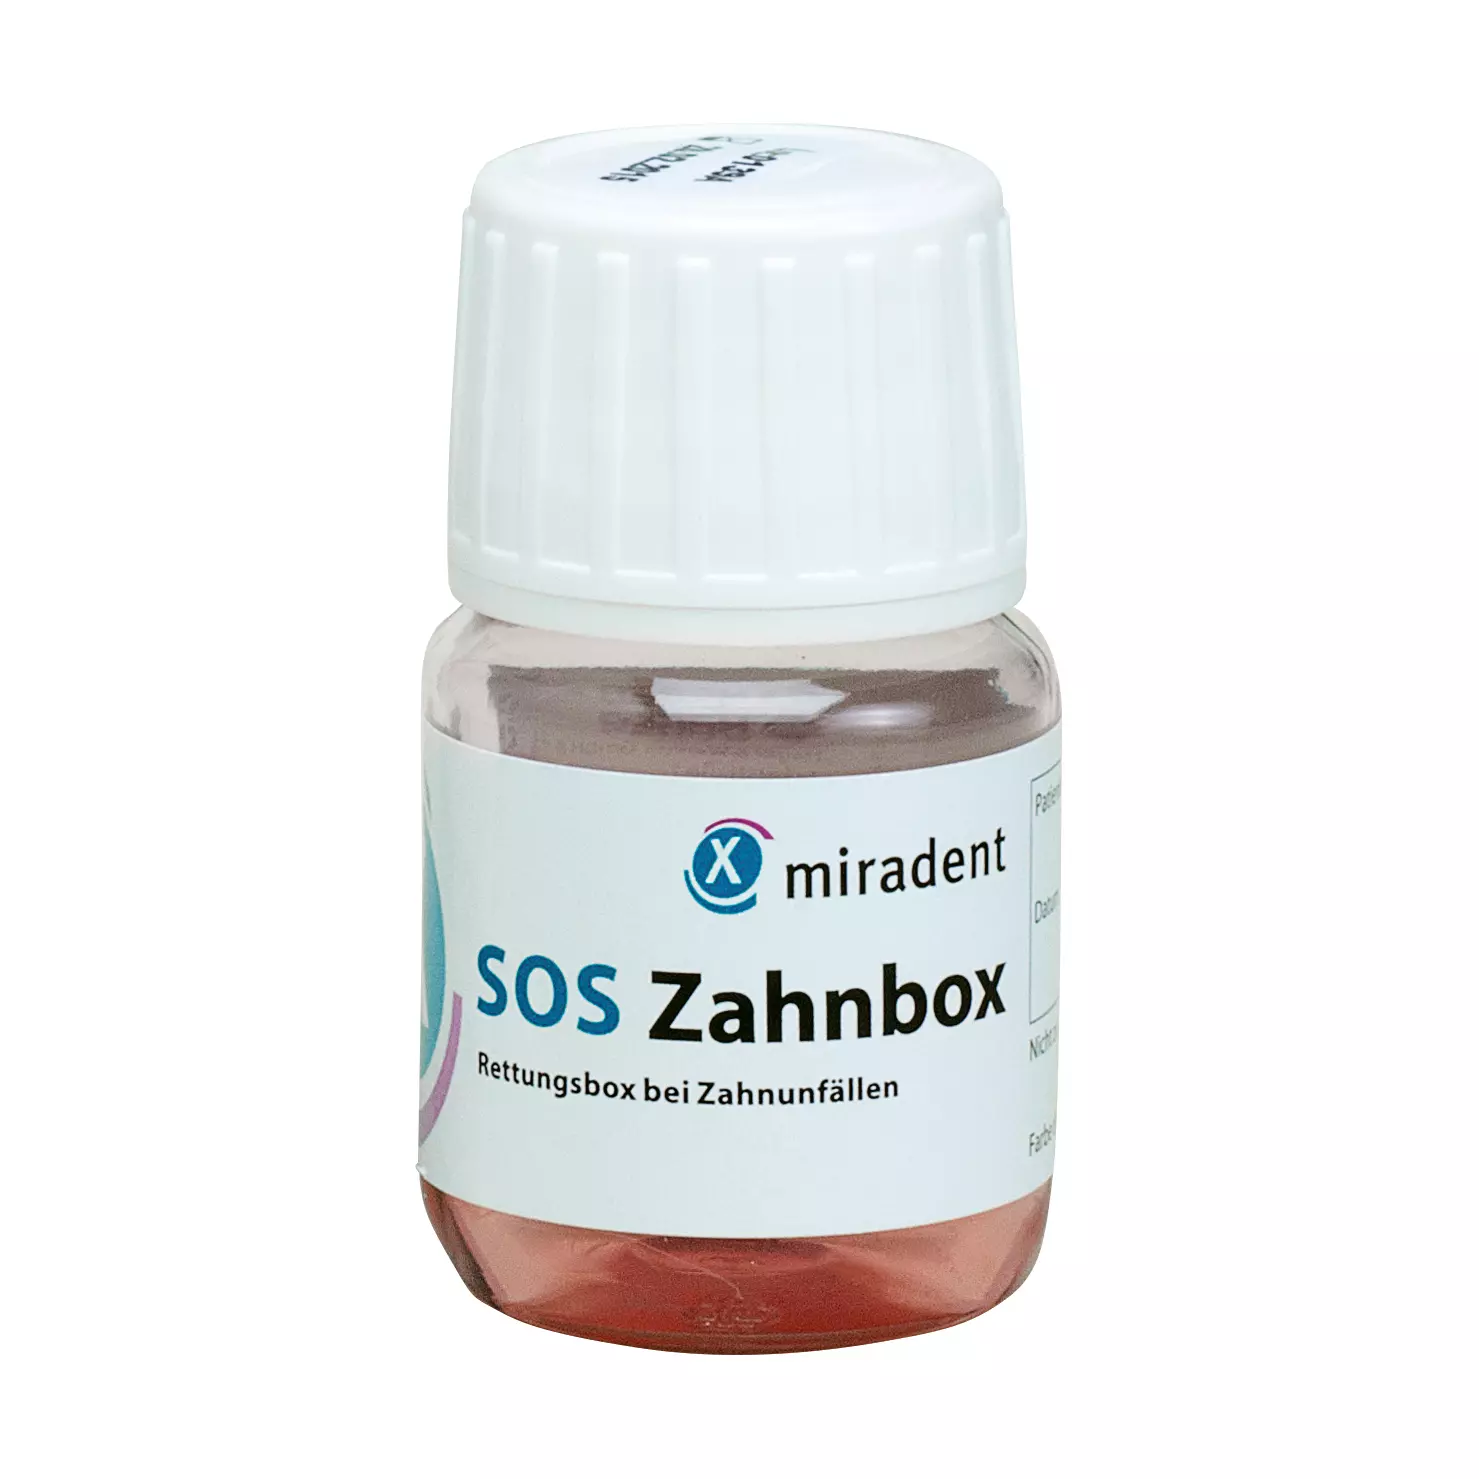 SOS Zahnbox